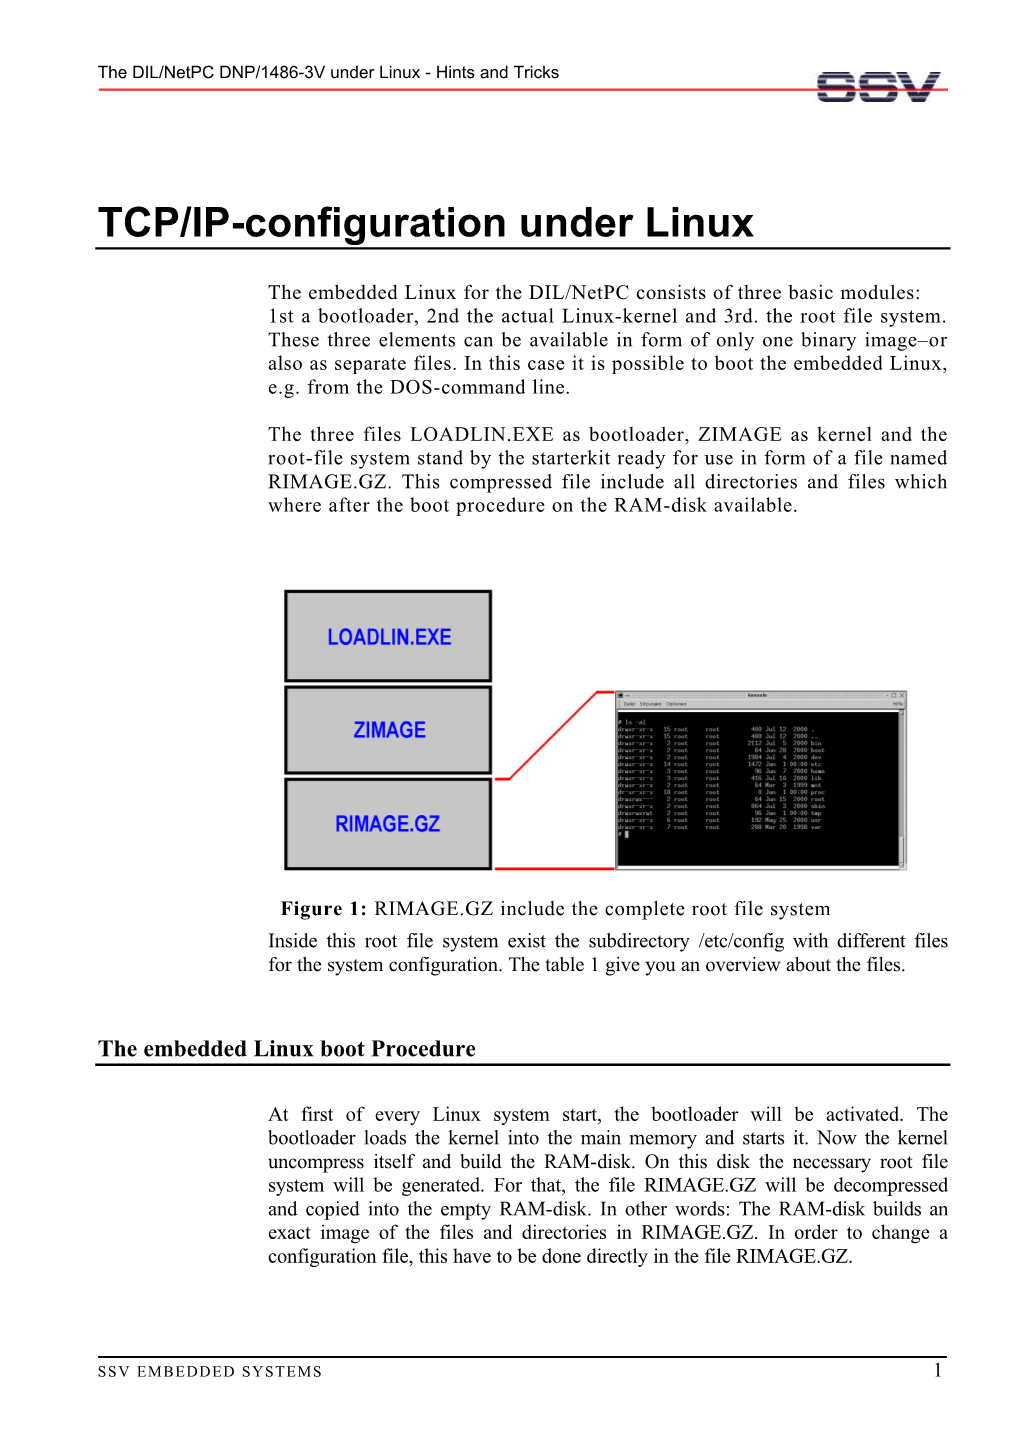 TCP/IP-Configuration Under Linux